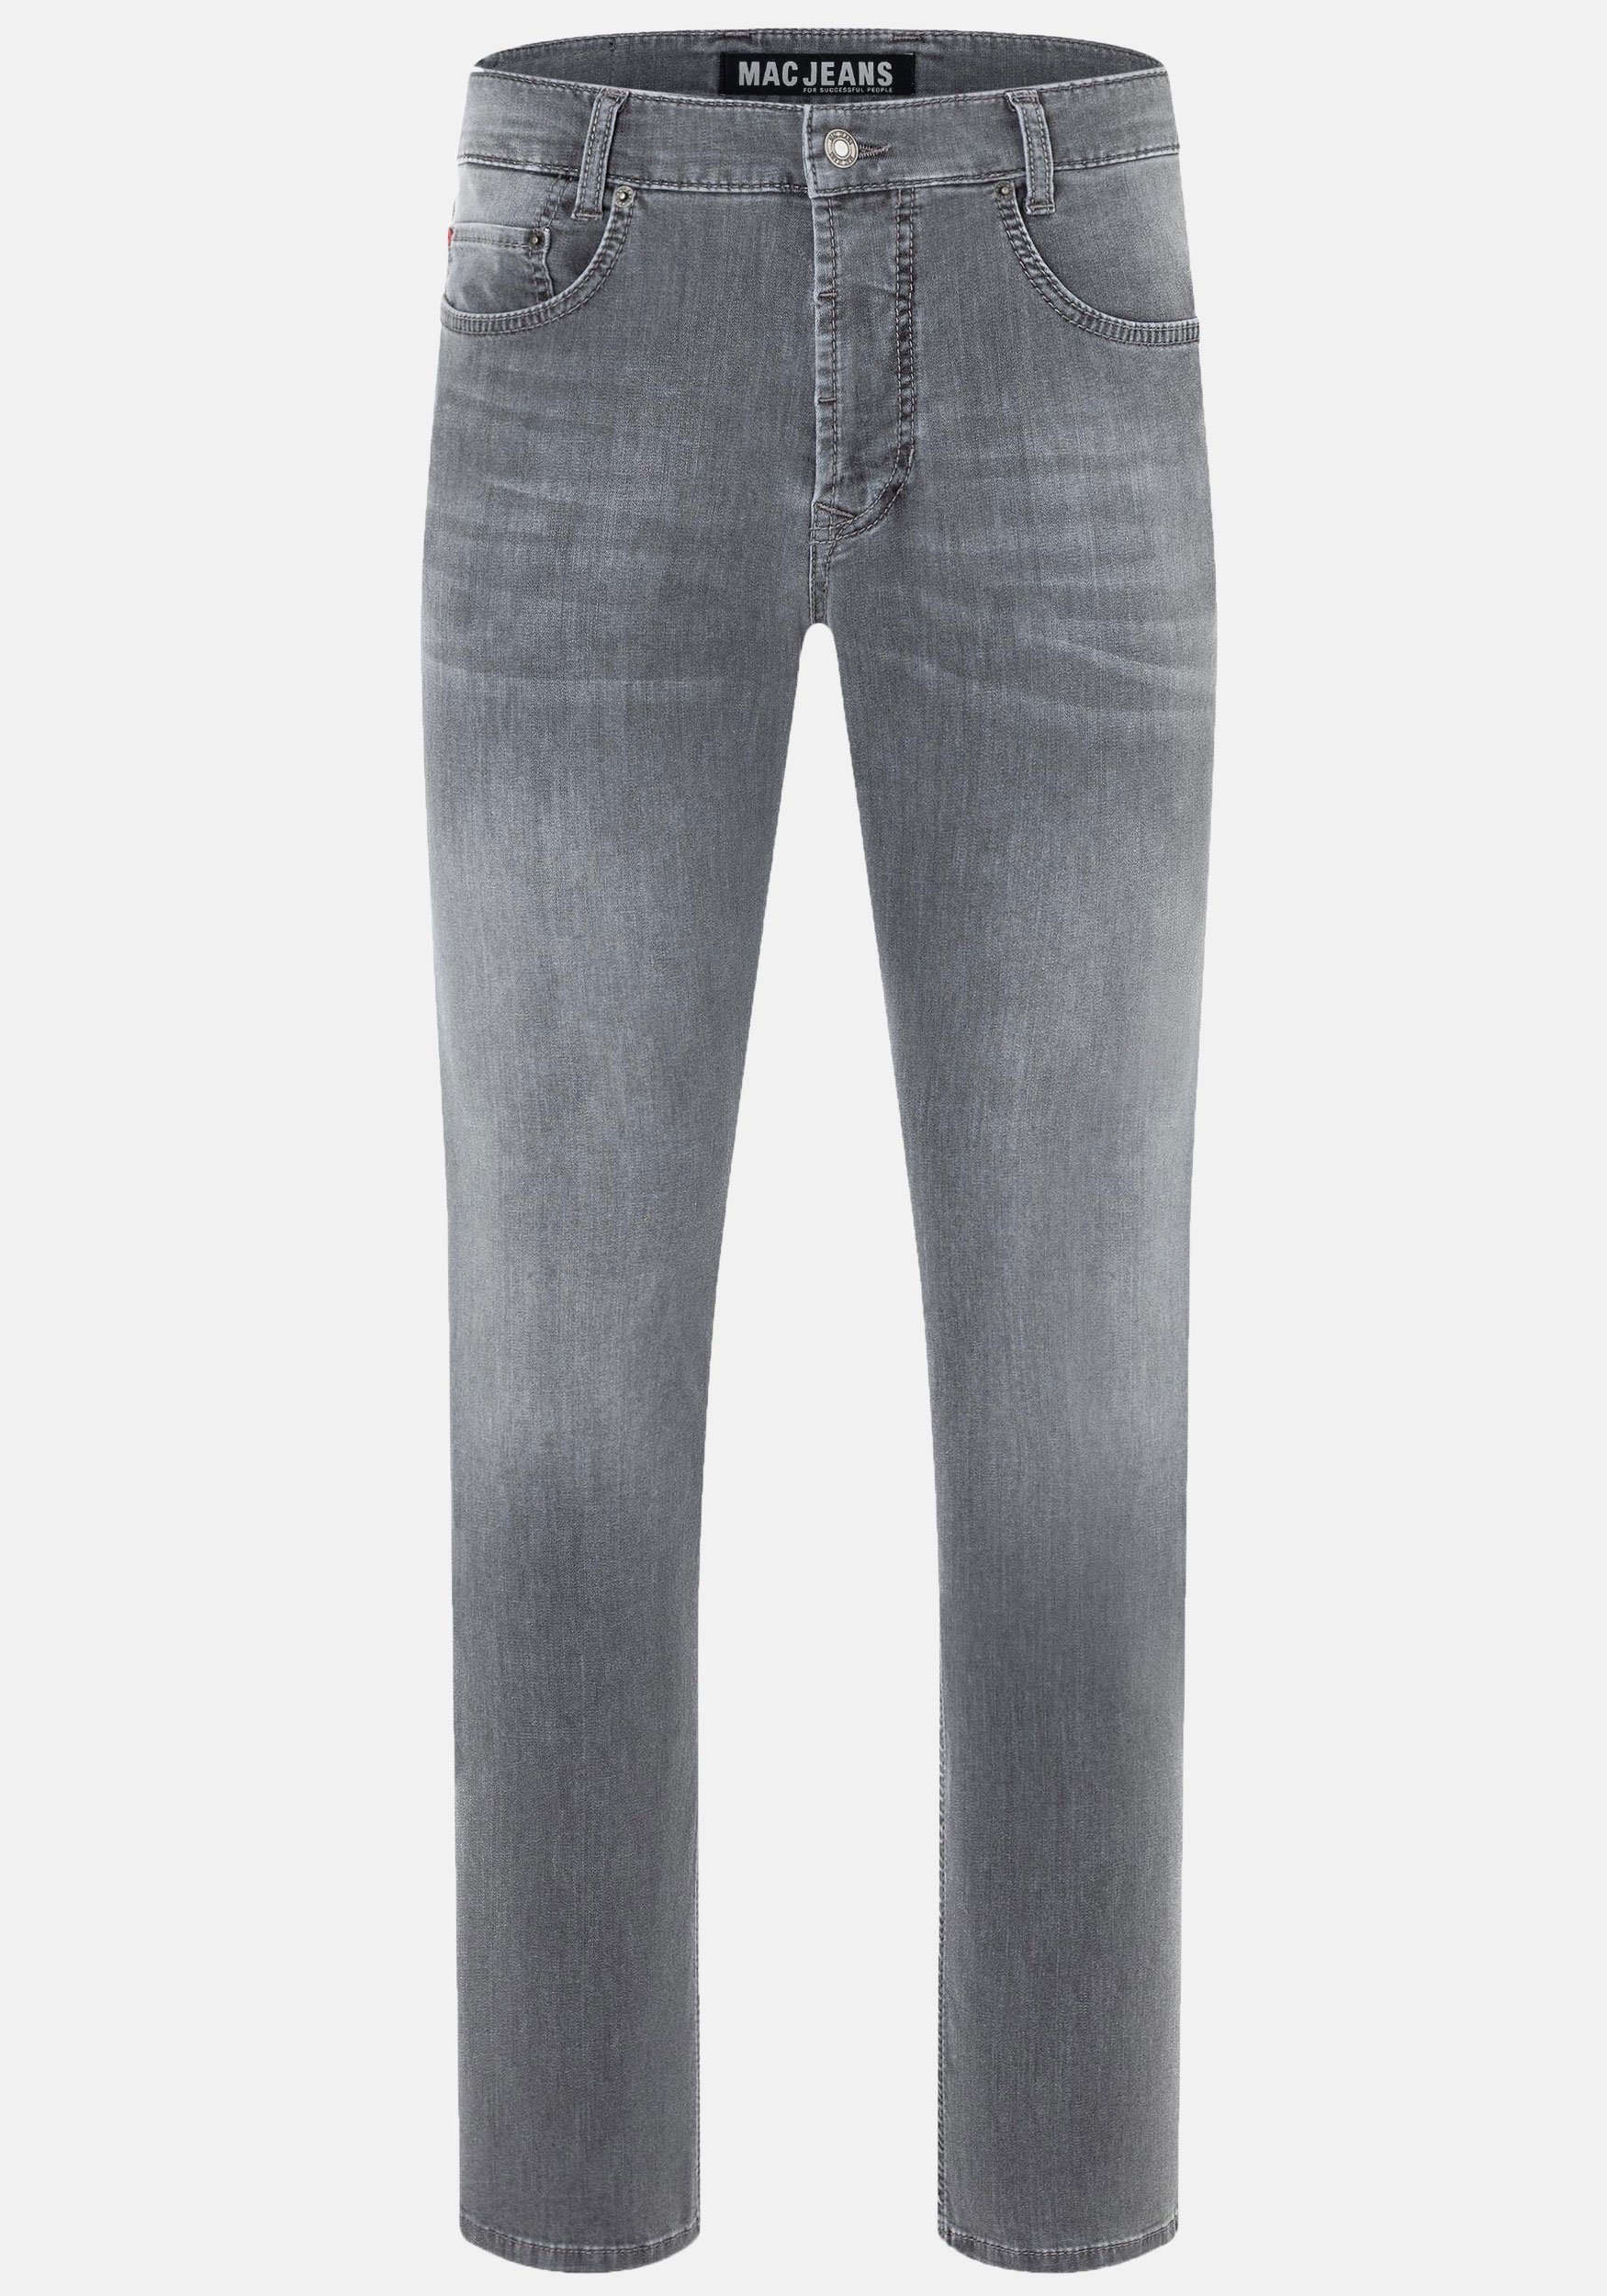 MAC Light Weight Sommerjeans 5-Pocket-Jeans Denim, Summer Grey H810 Used leichte Arne